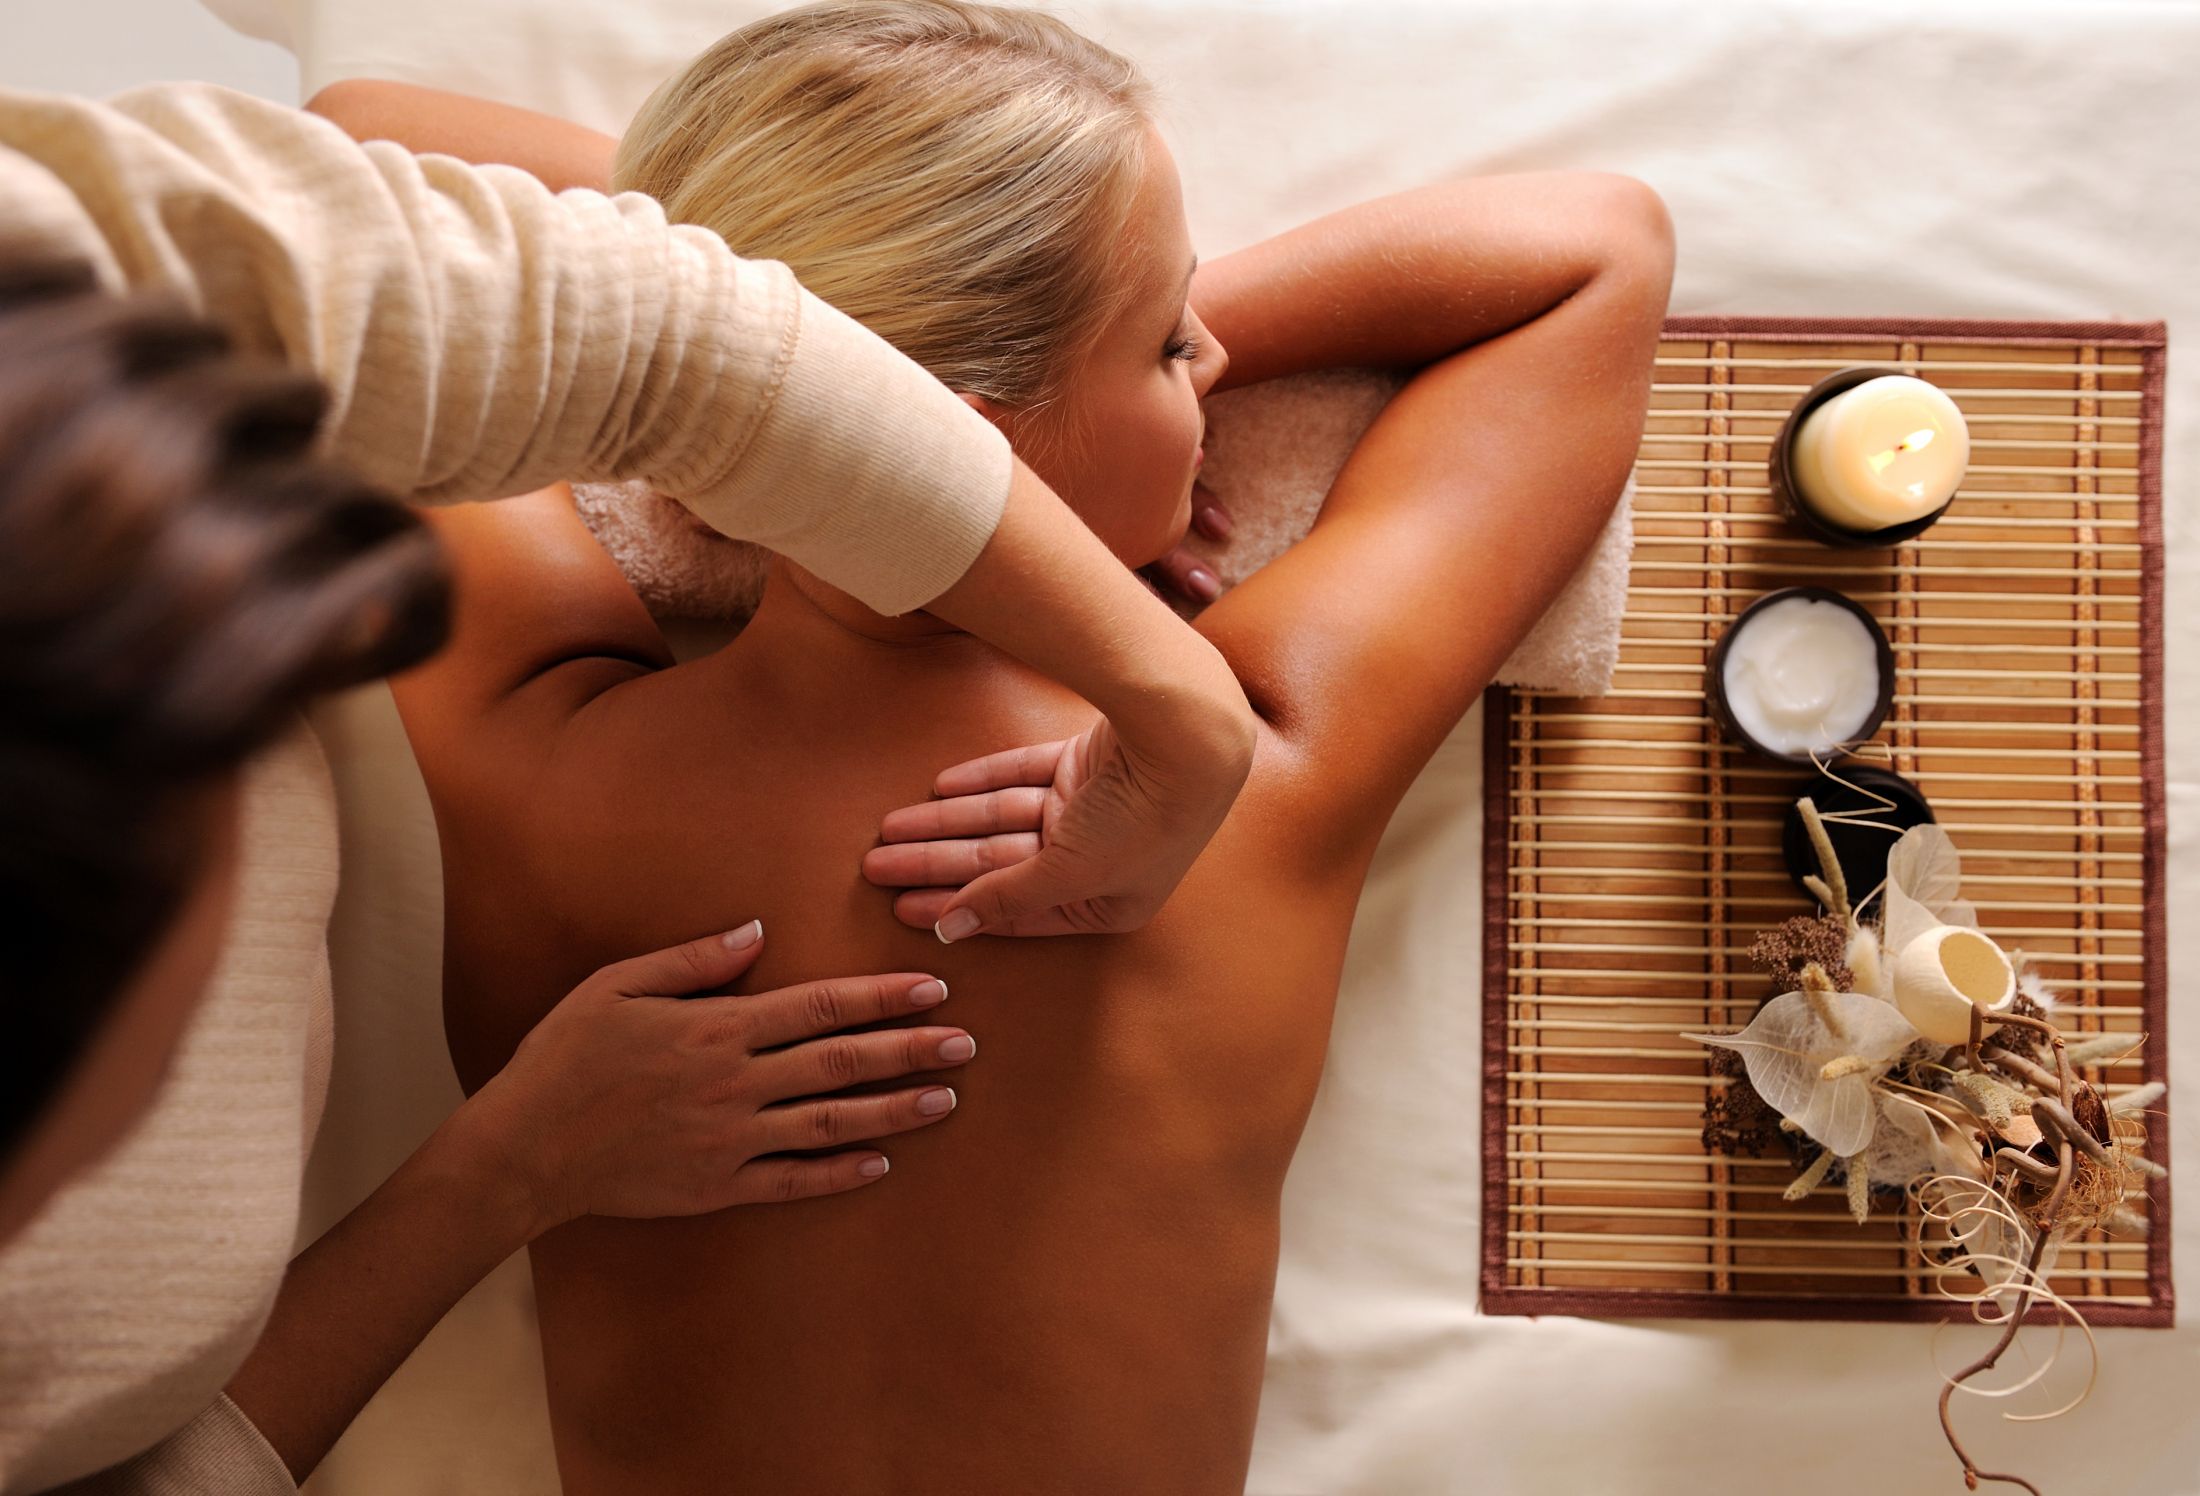 female-getting-relaxation-massage-beauty-salon-high-angle-view.jpg